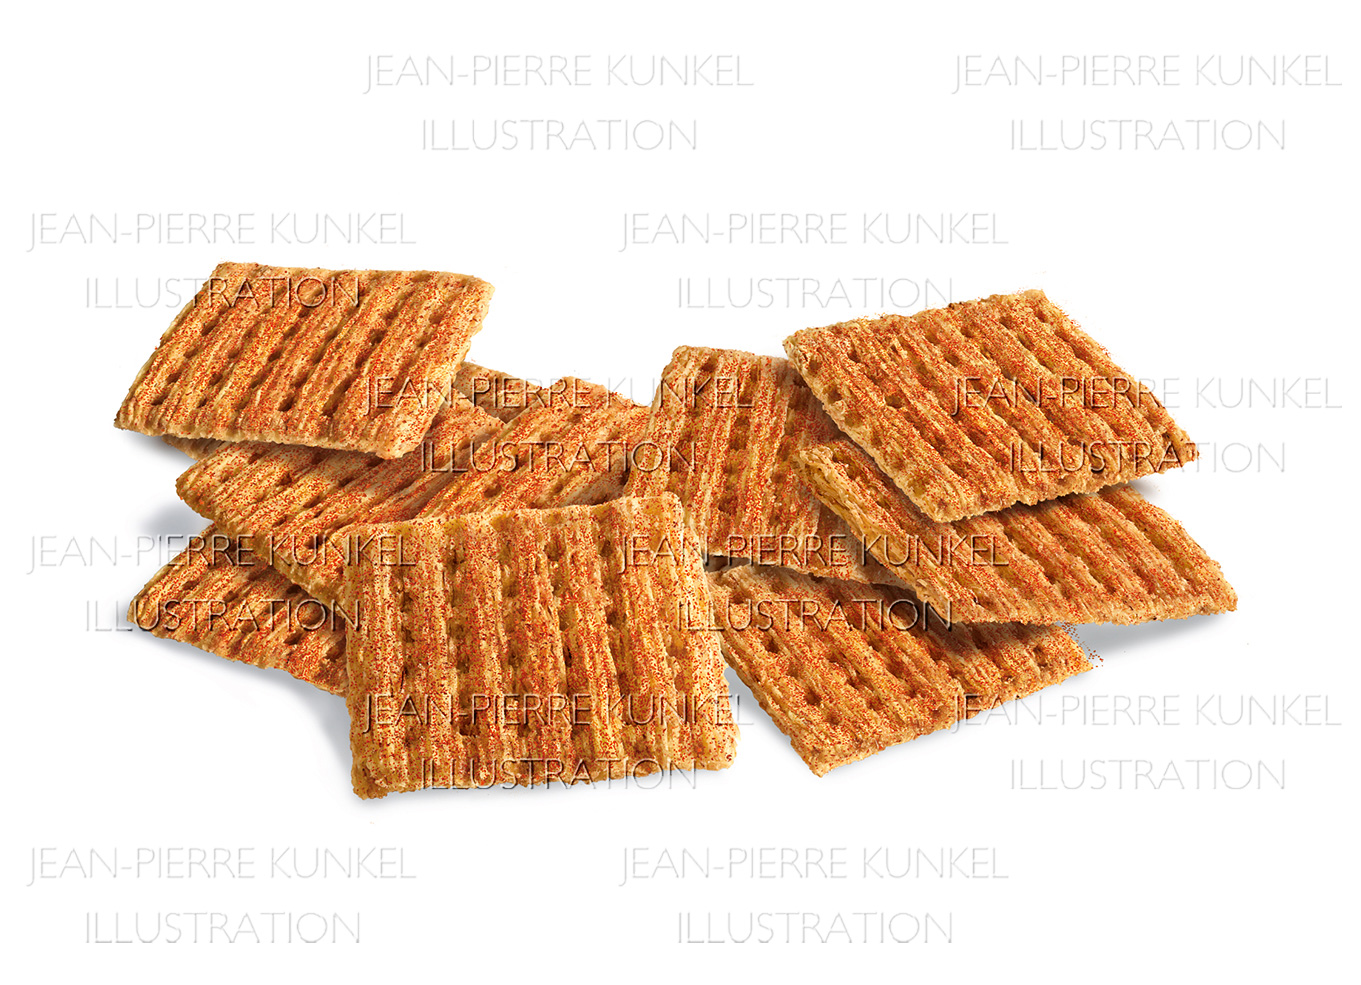 Paprika-Cracker